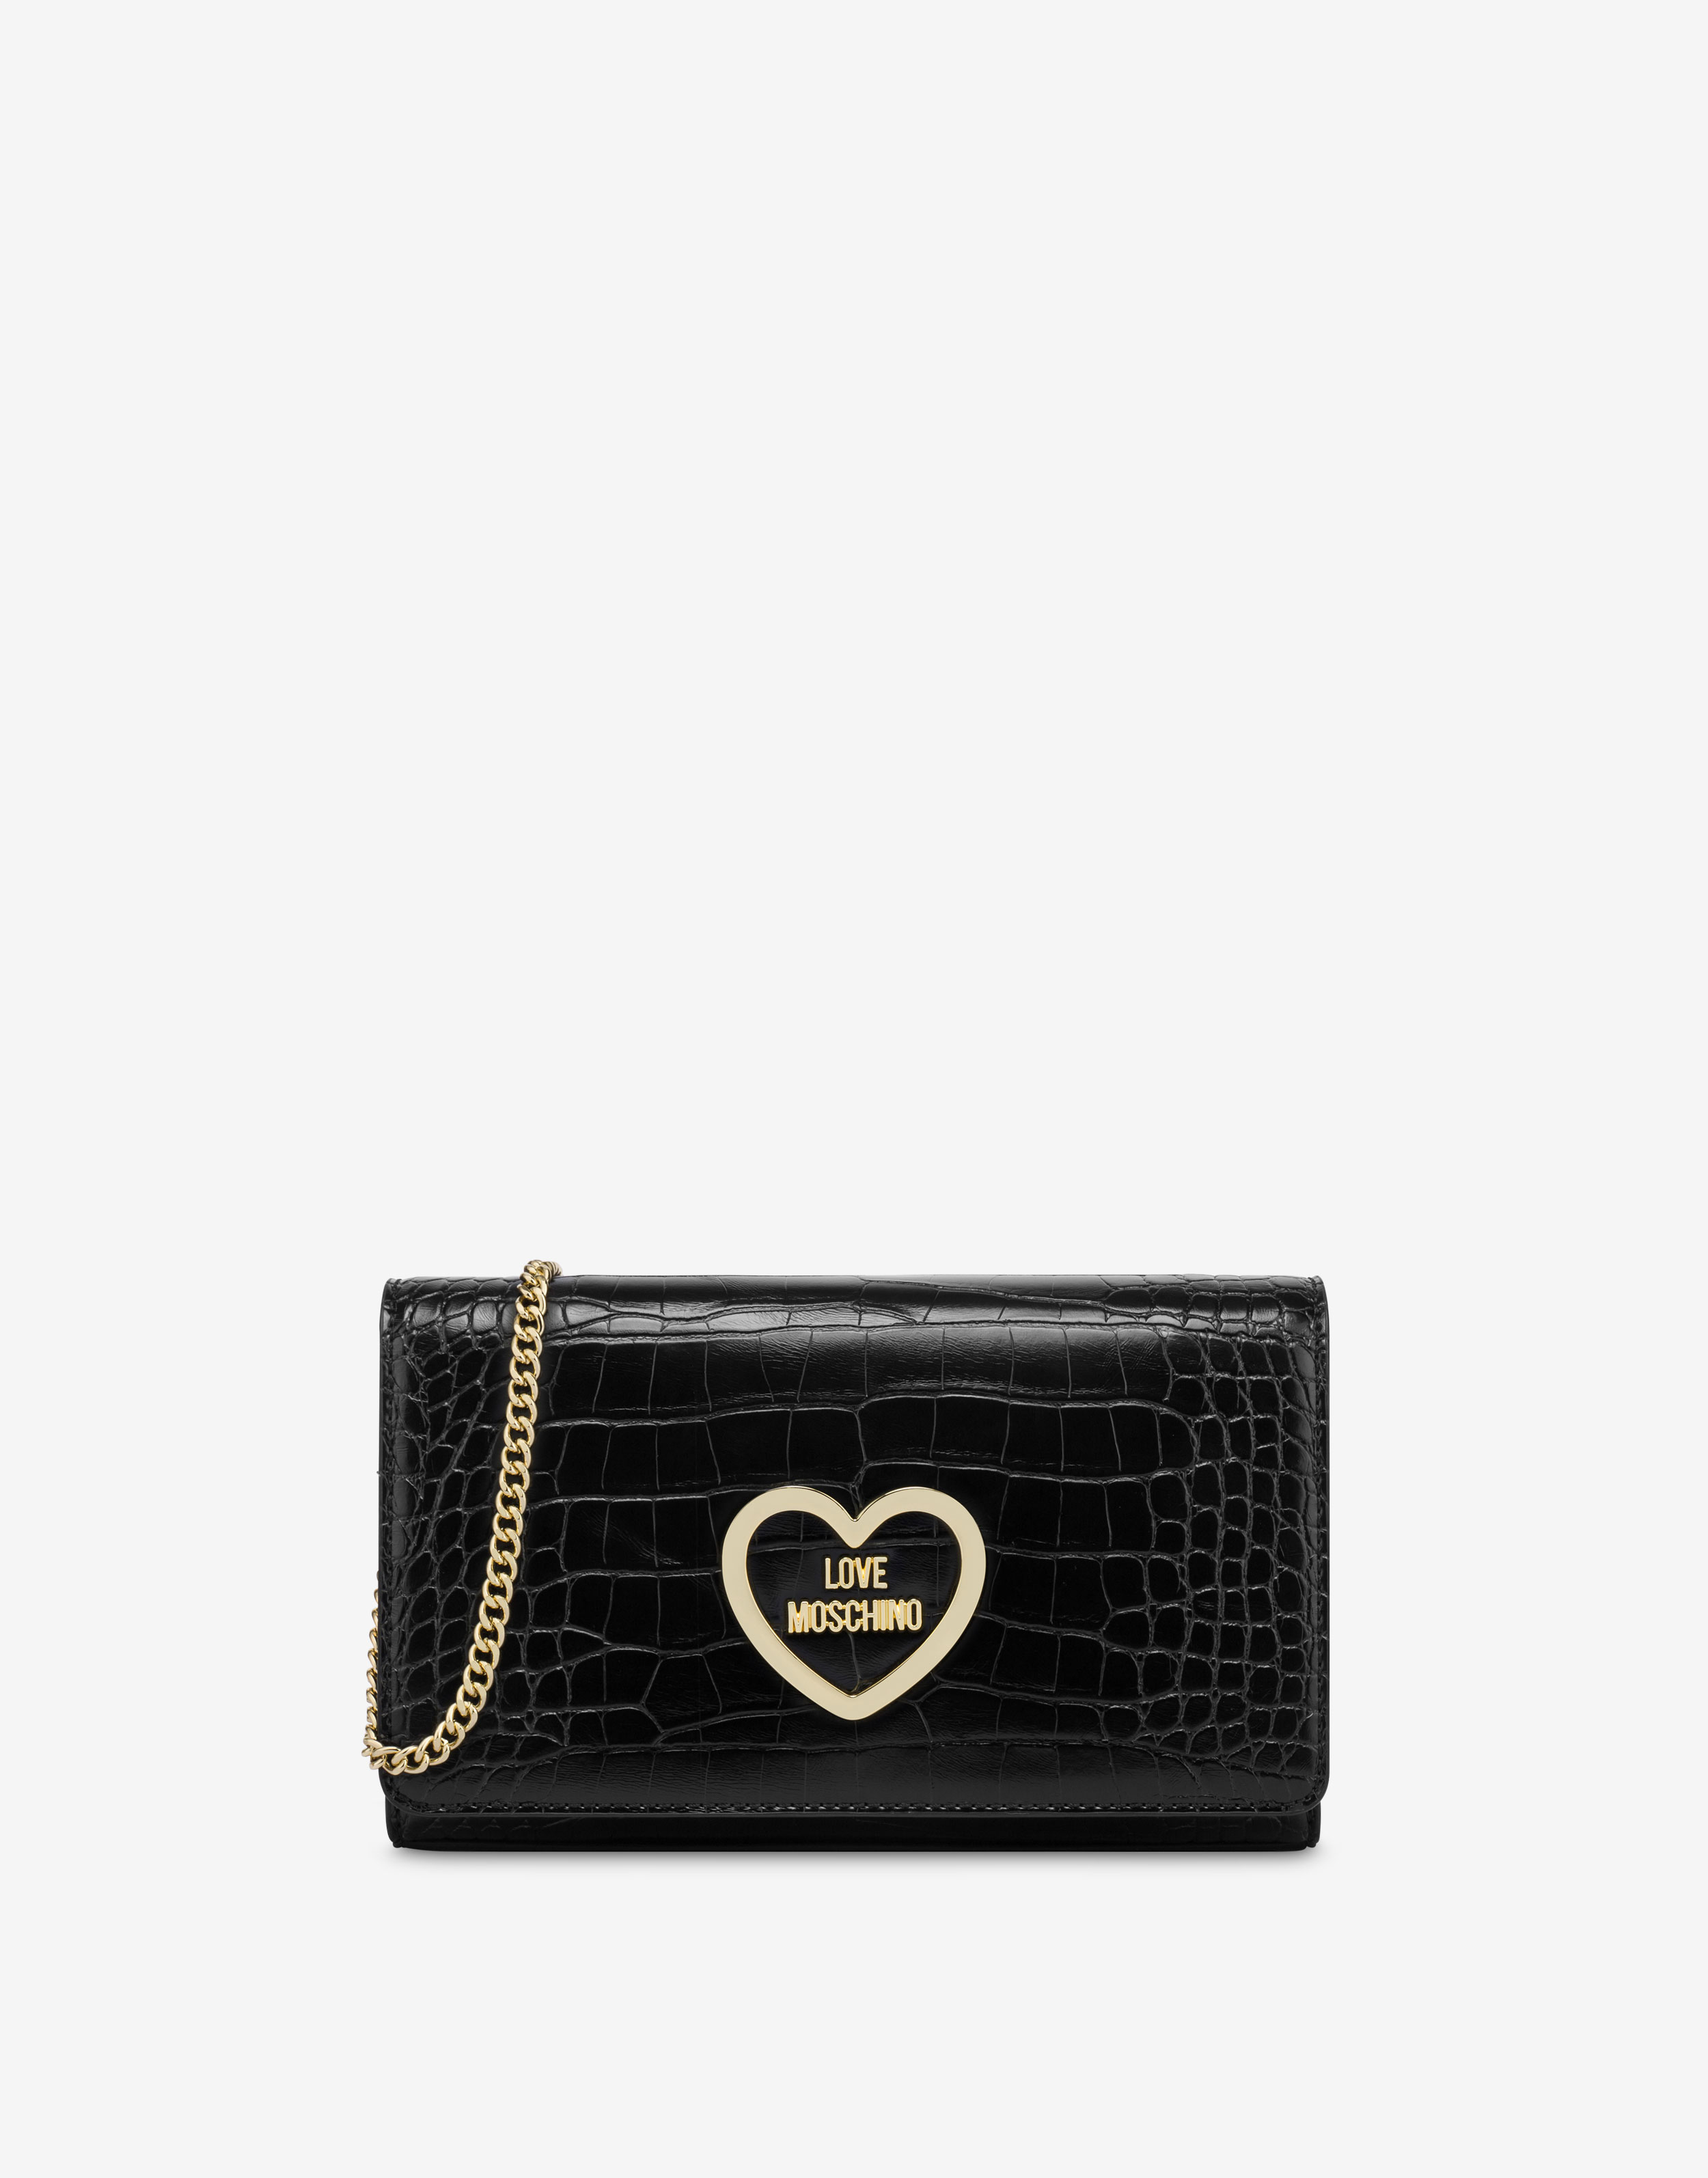 Love Moschino women shoulder bag white: Handbags: Amazon.com